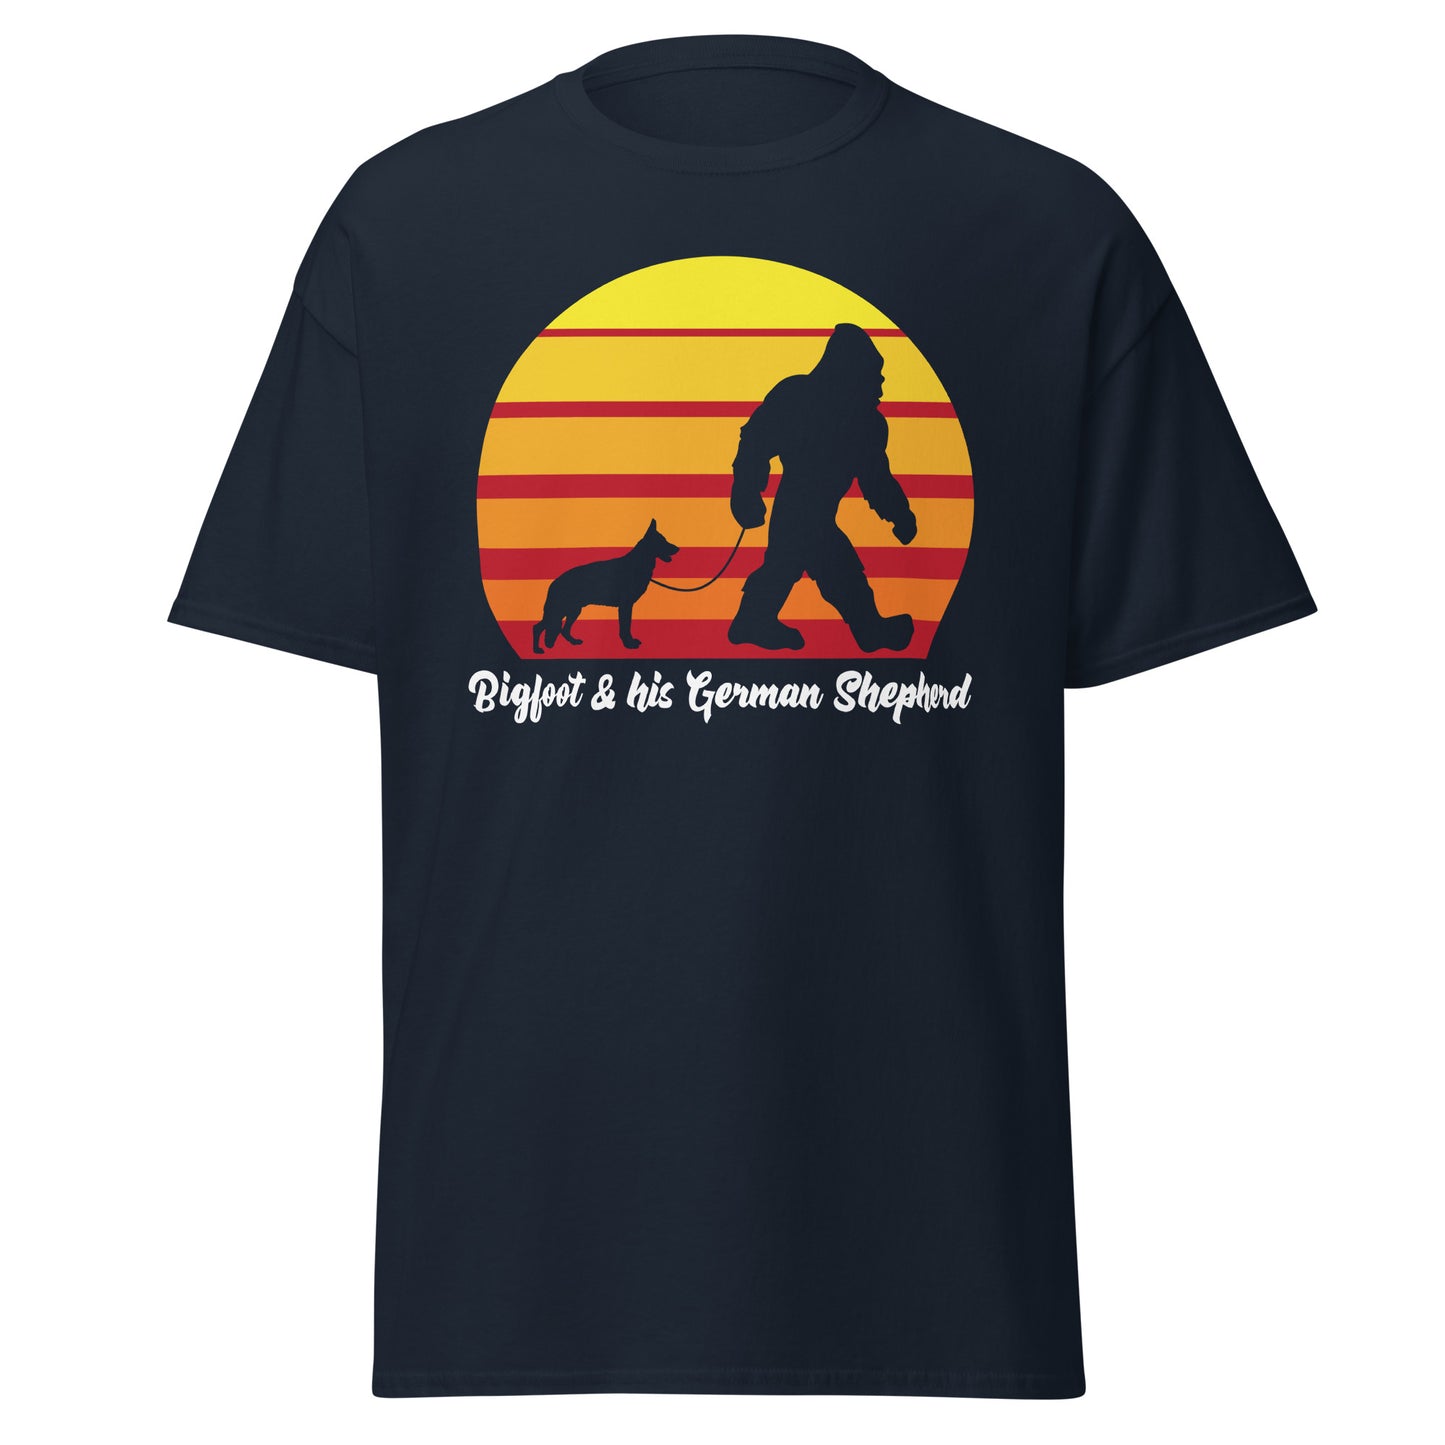 Bigfoot and his German Shepherd men’s navy t-shirt by Dog Artistry.